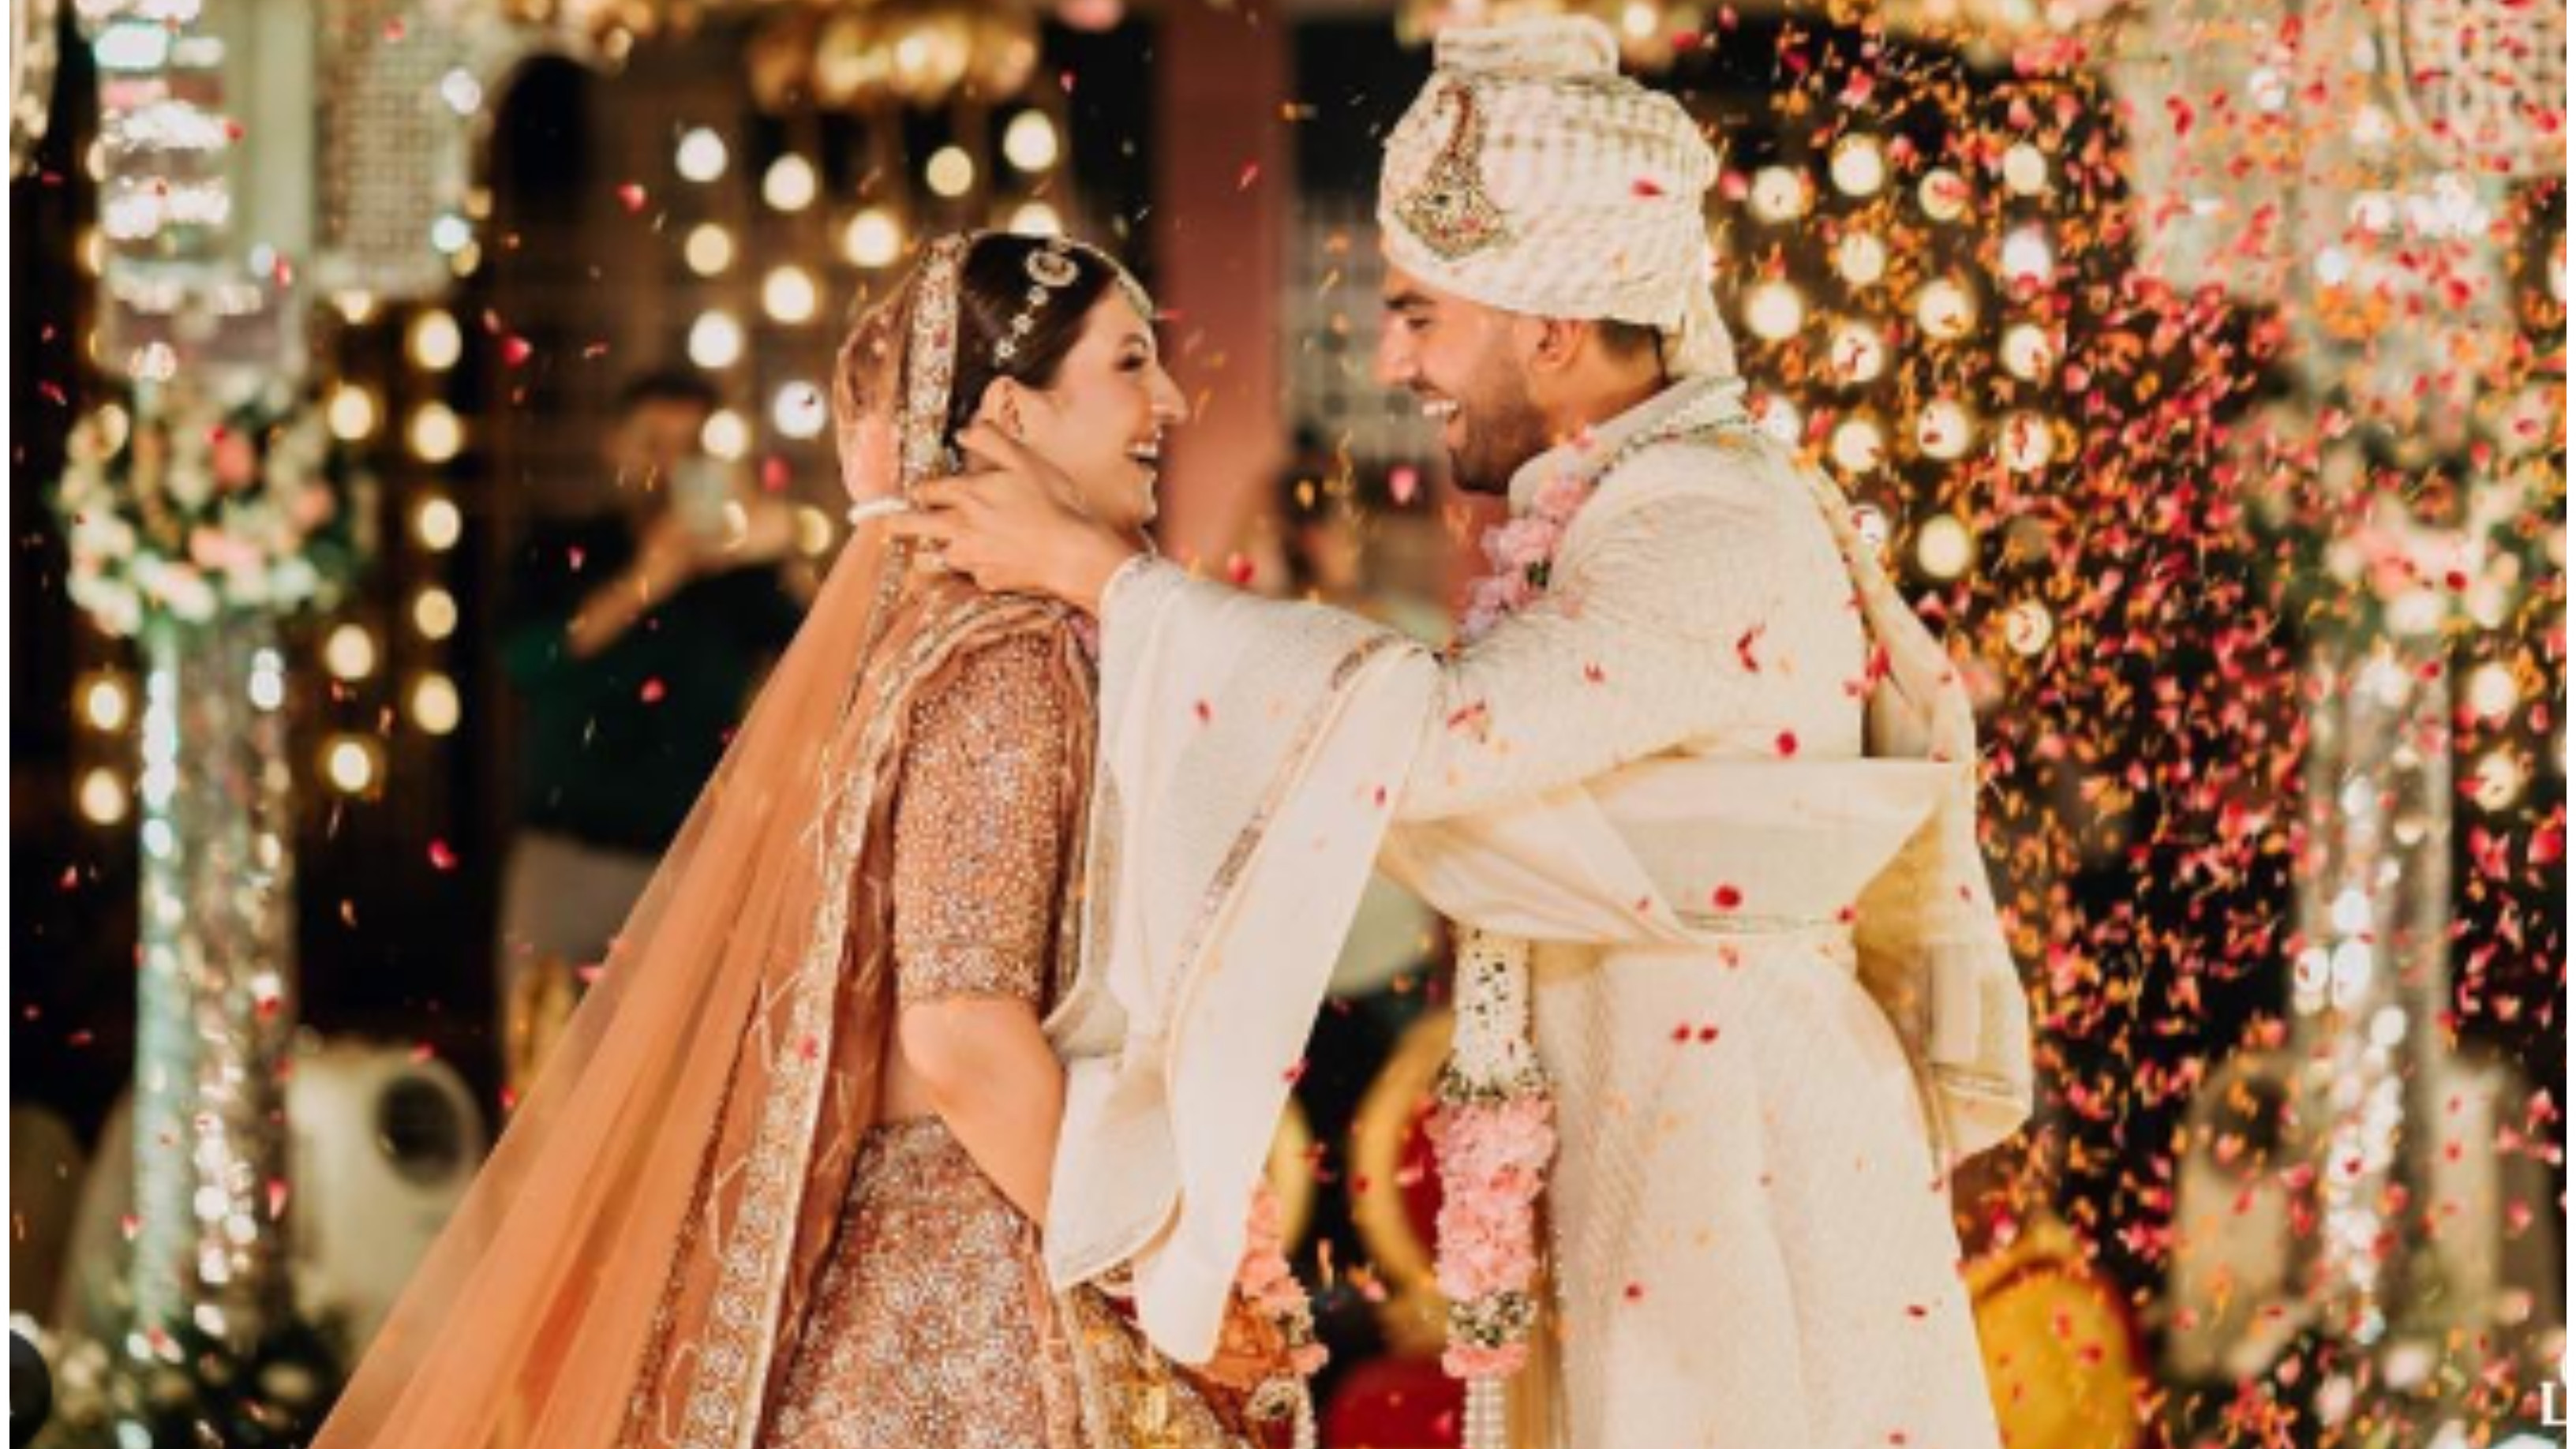 Deepak Chahar ties knot with his fiancee Jaya Bhardwaj; shares picture on social media